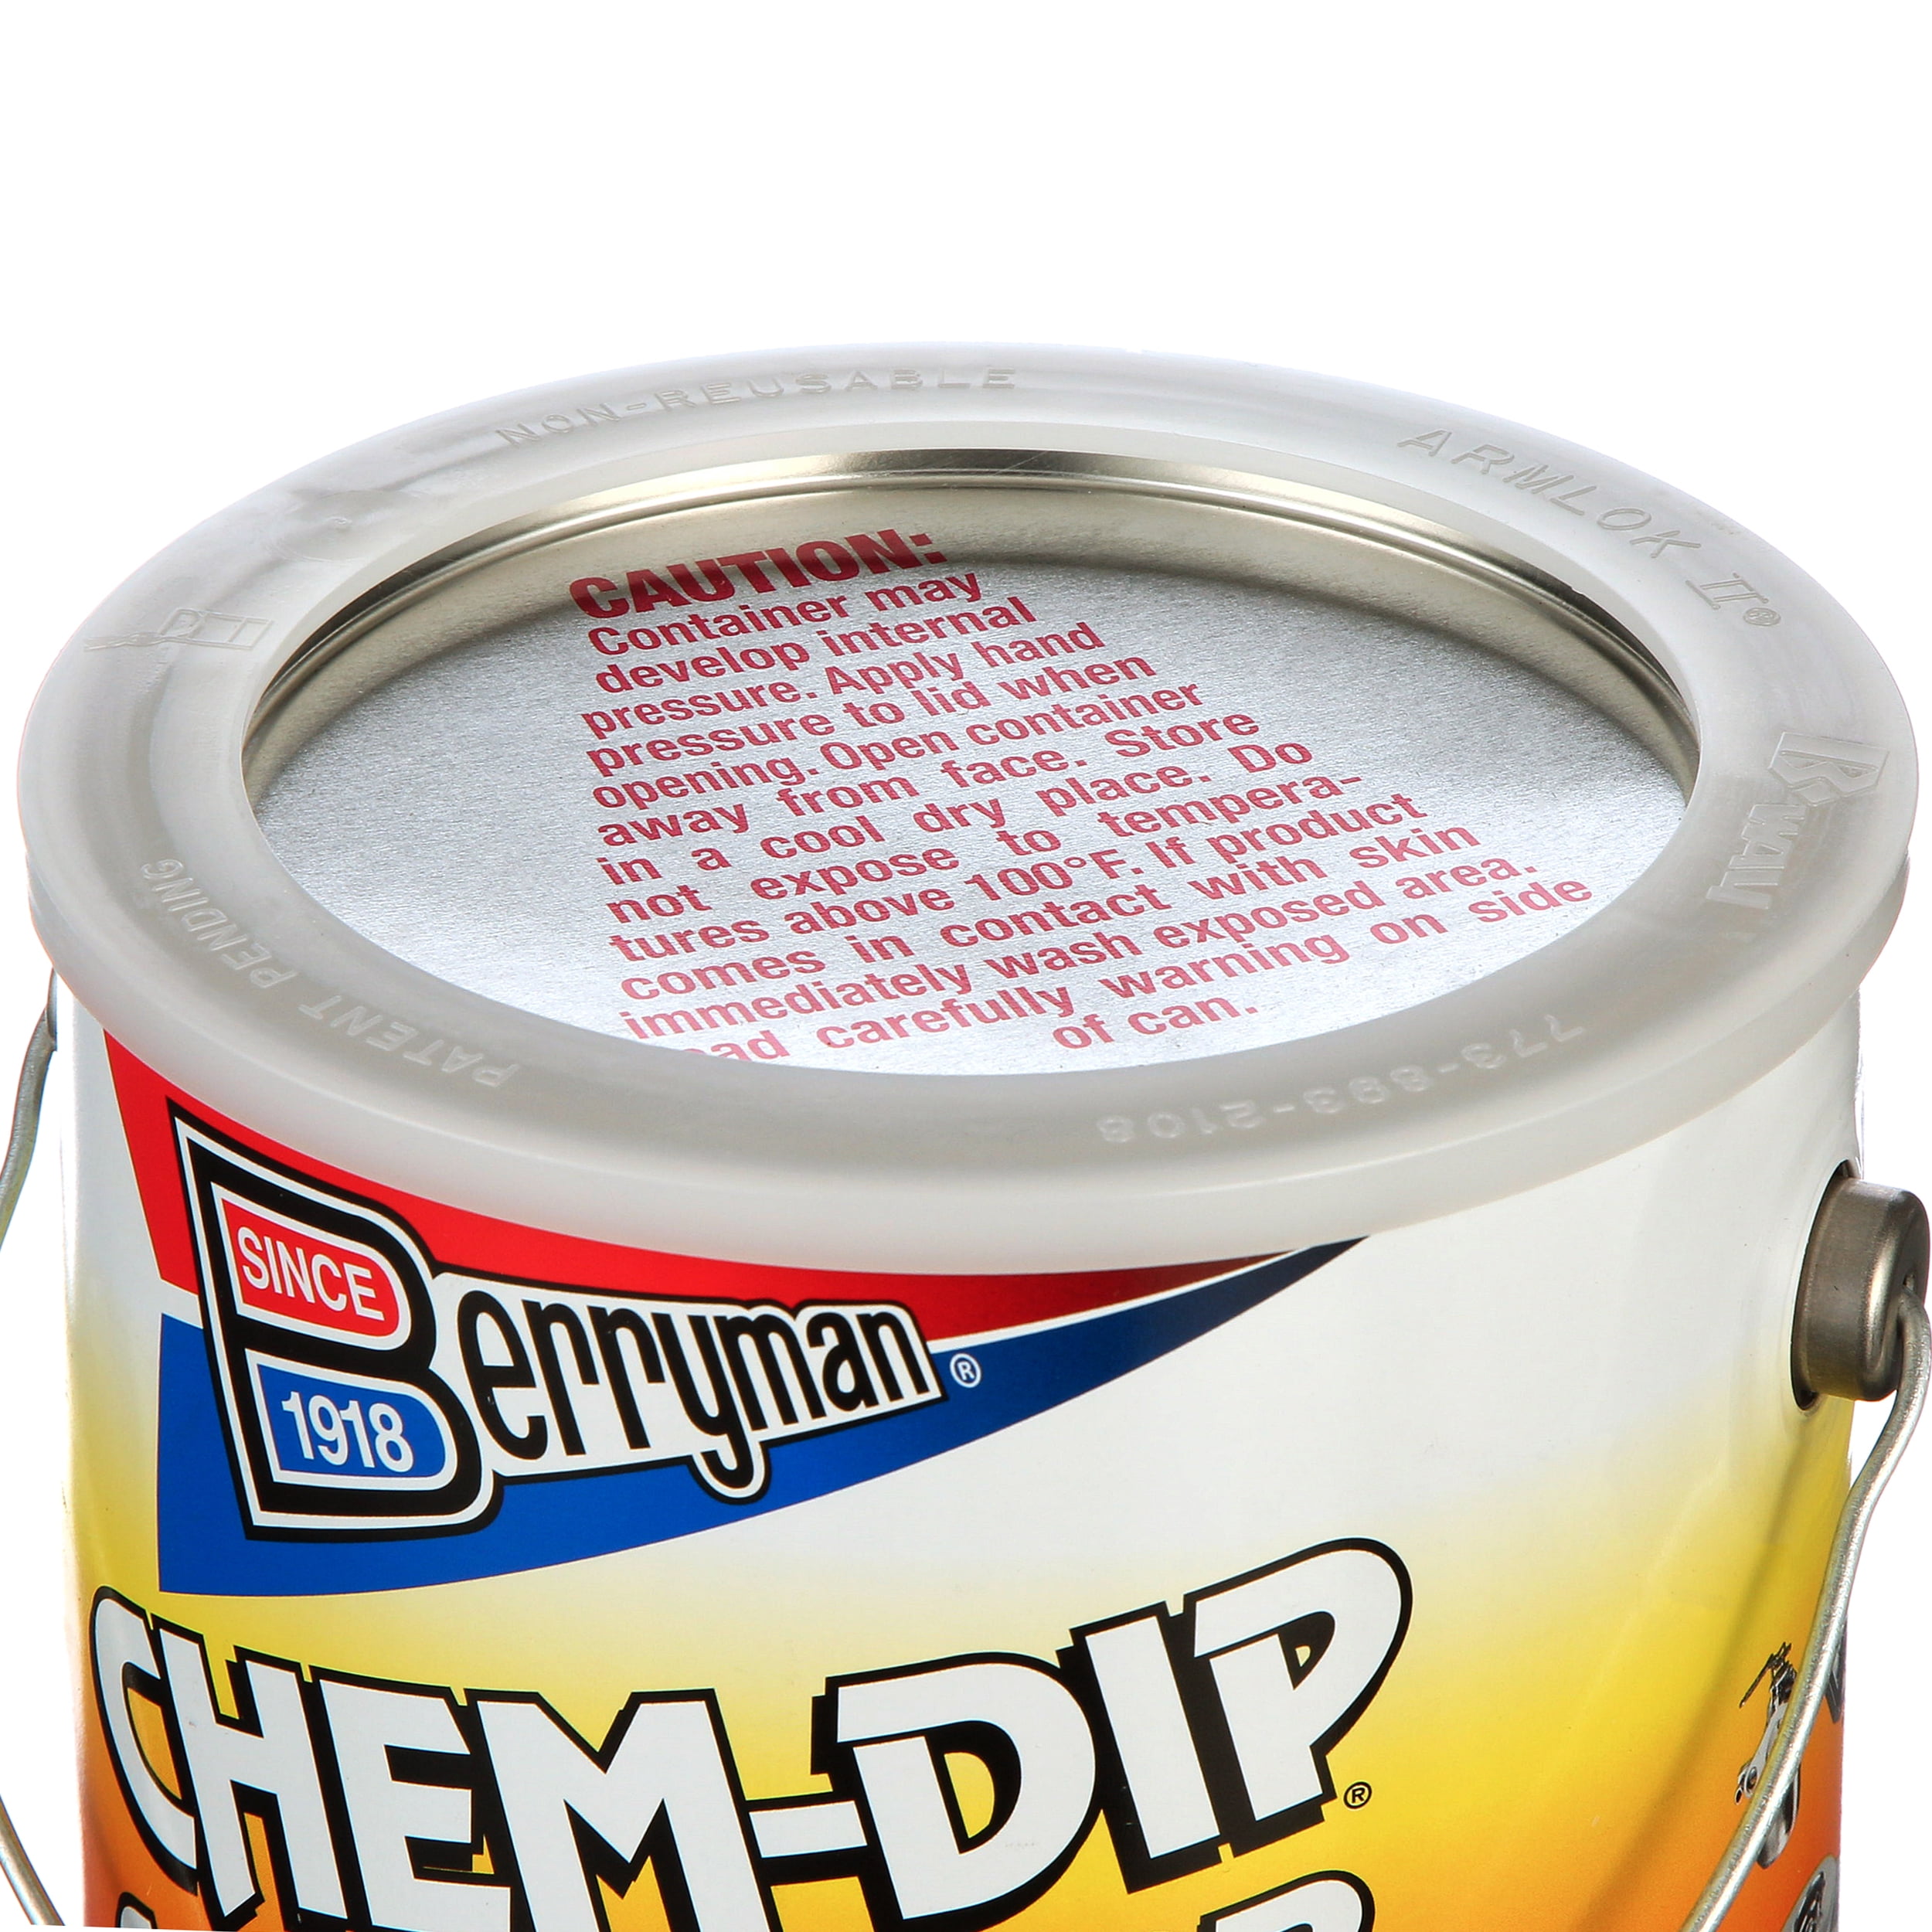 Berryman Chem-Dip Professional Parts Cleaner - 5 gal bucket